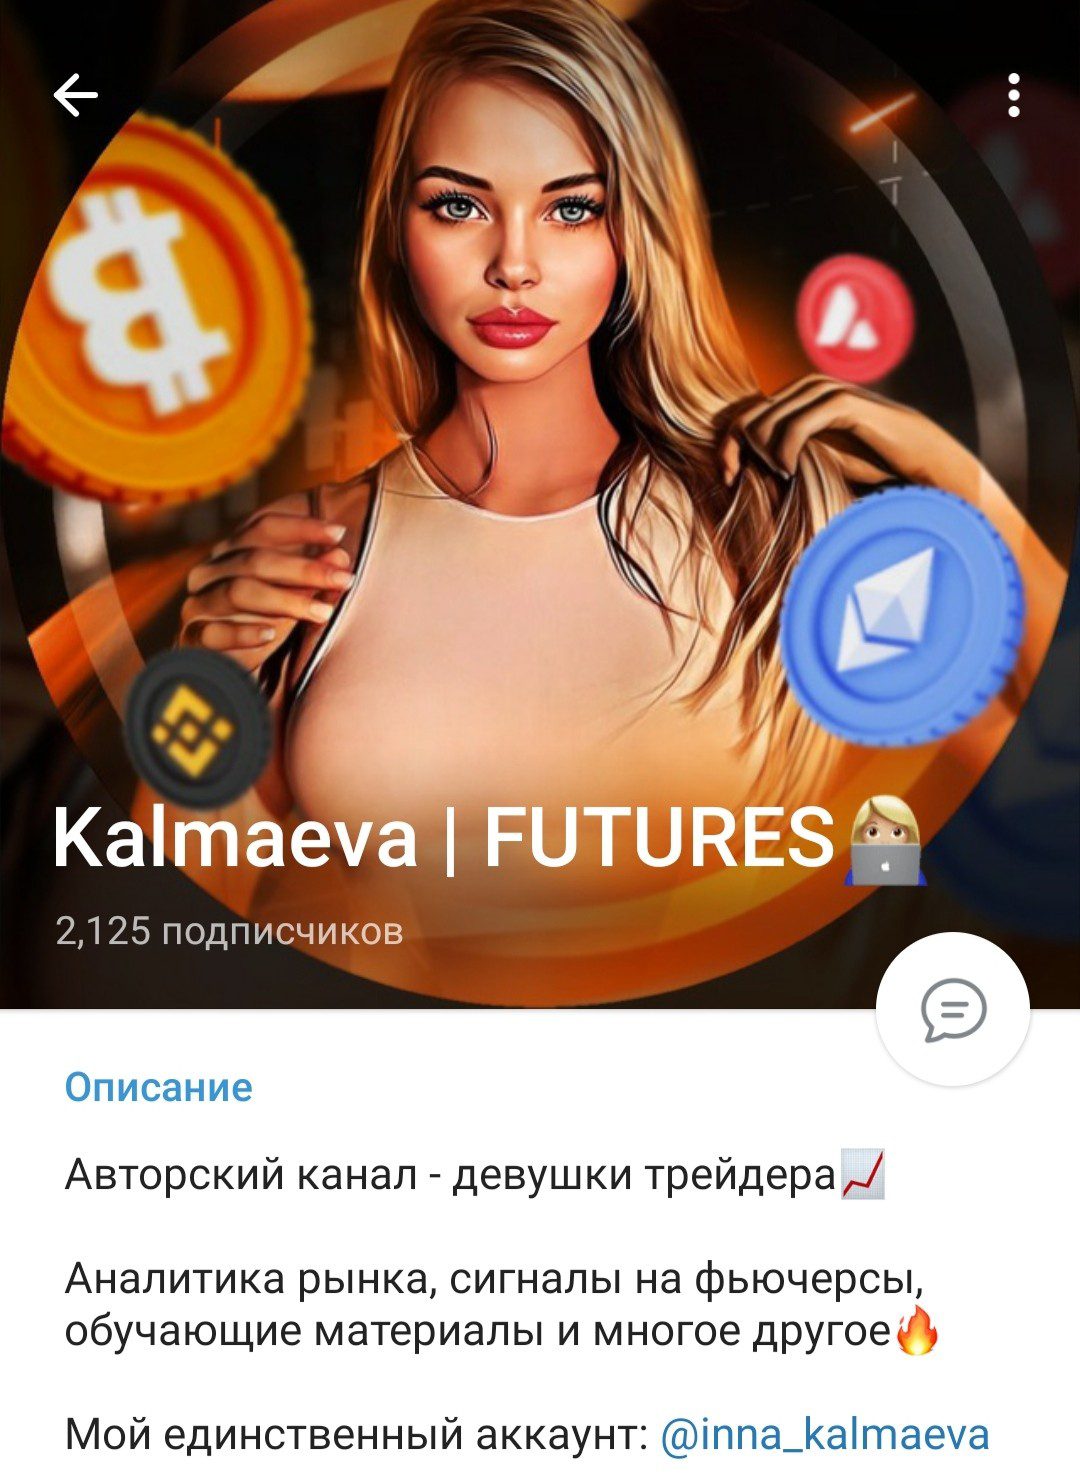 Kalmaeva Futures обзор проекта